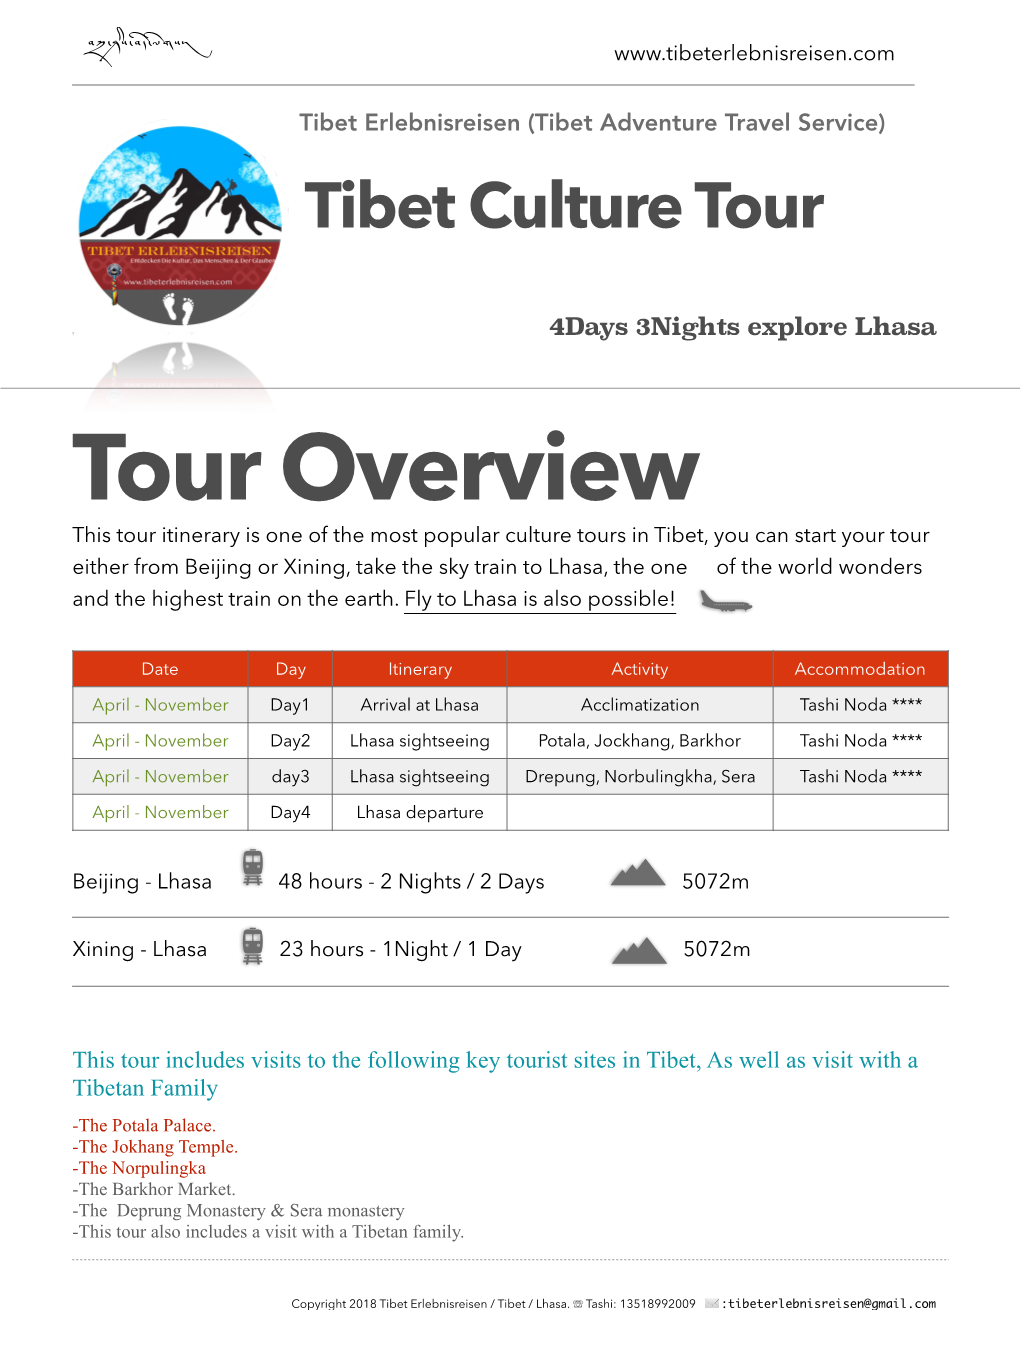 4Days 3Nights Explore Lhasa